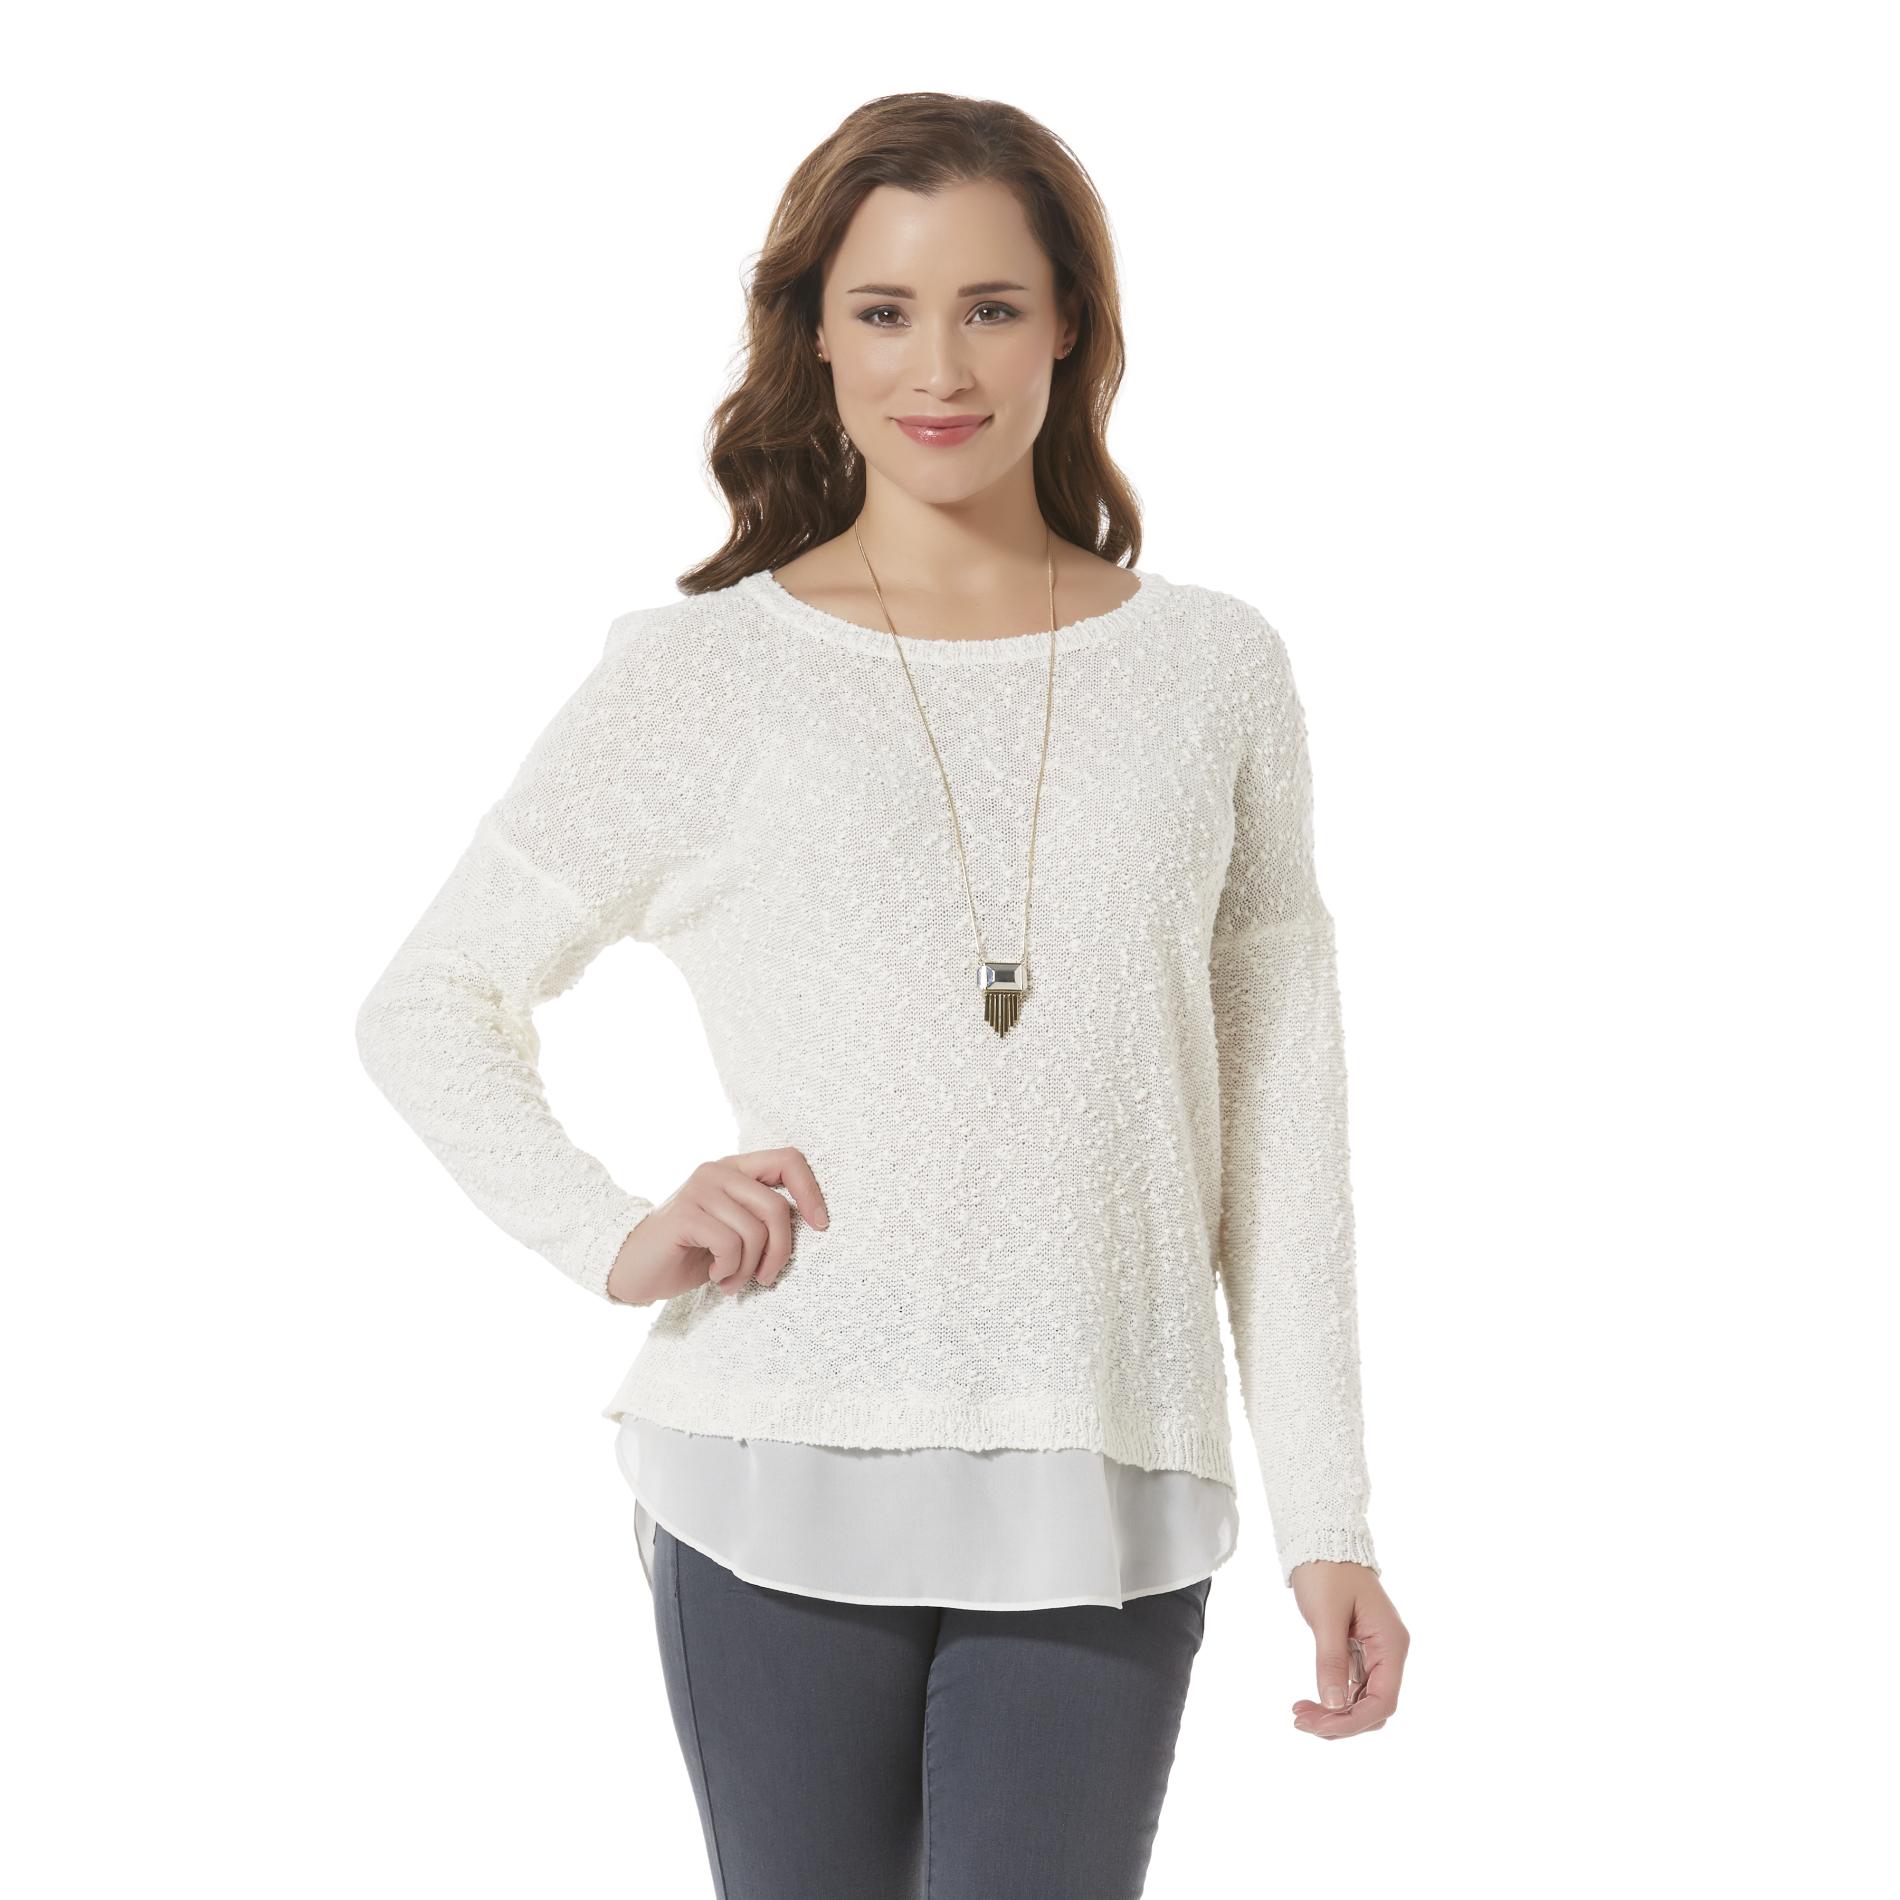 Metaphor Women's Layered-Look Sweater - Sears